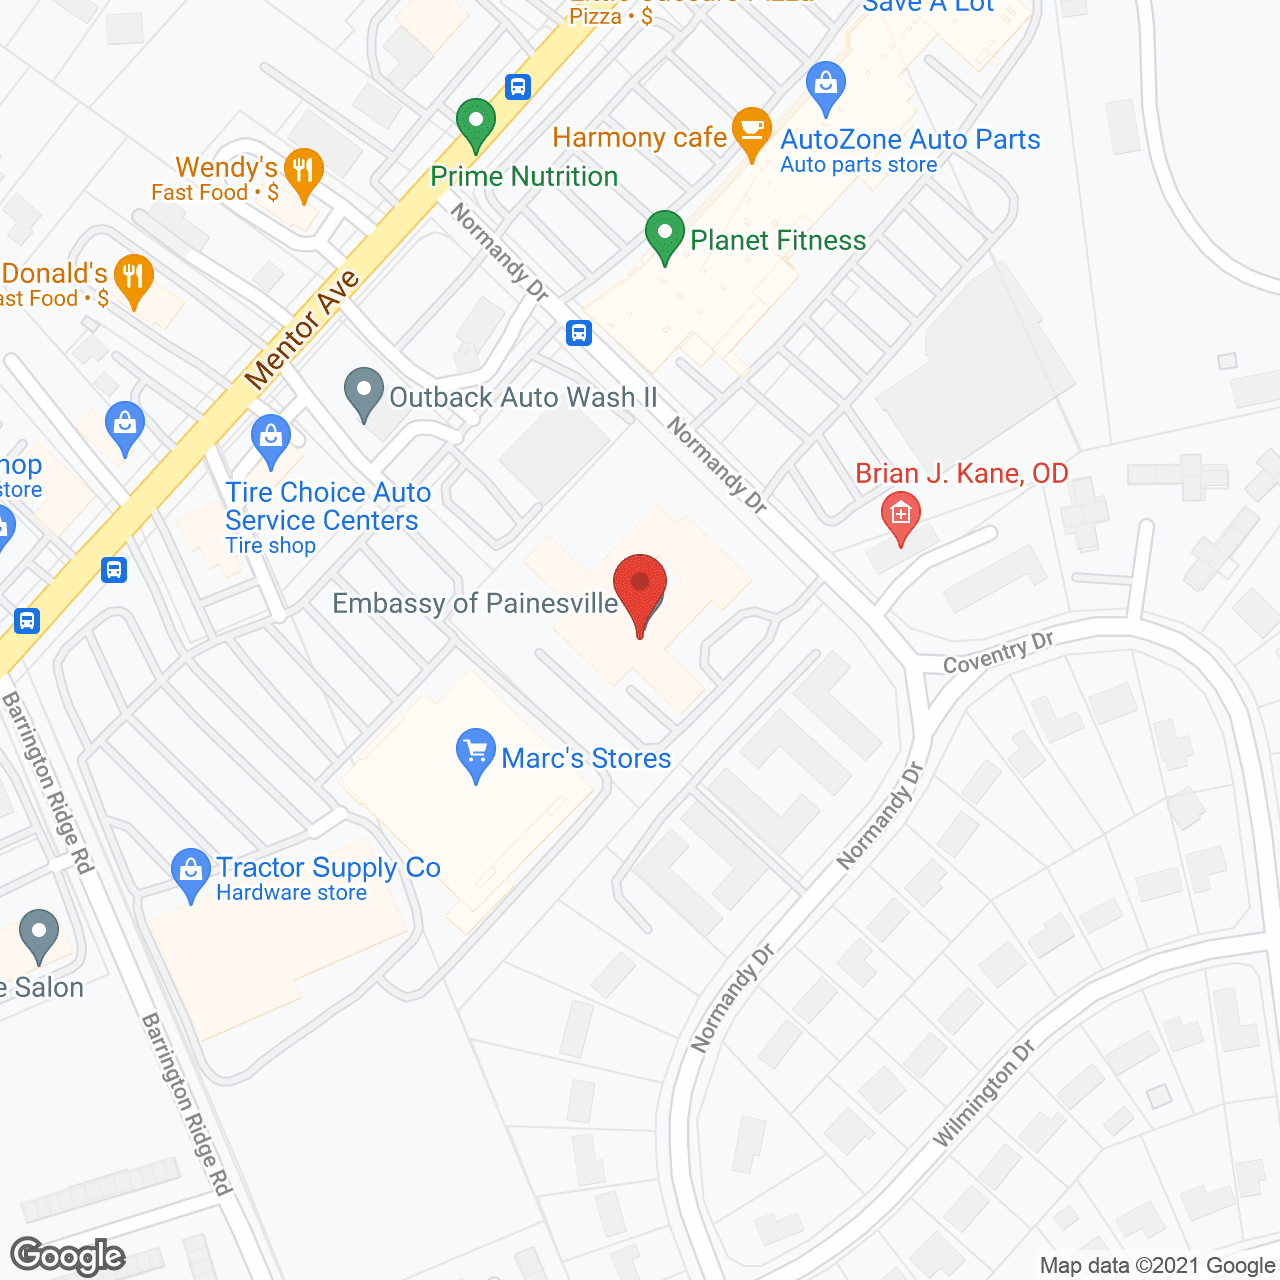 The LakeMed Nursing and Rehabilitation Center in google map